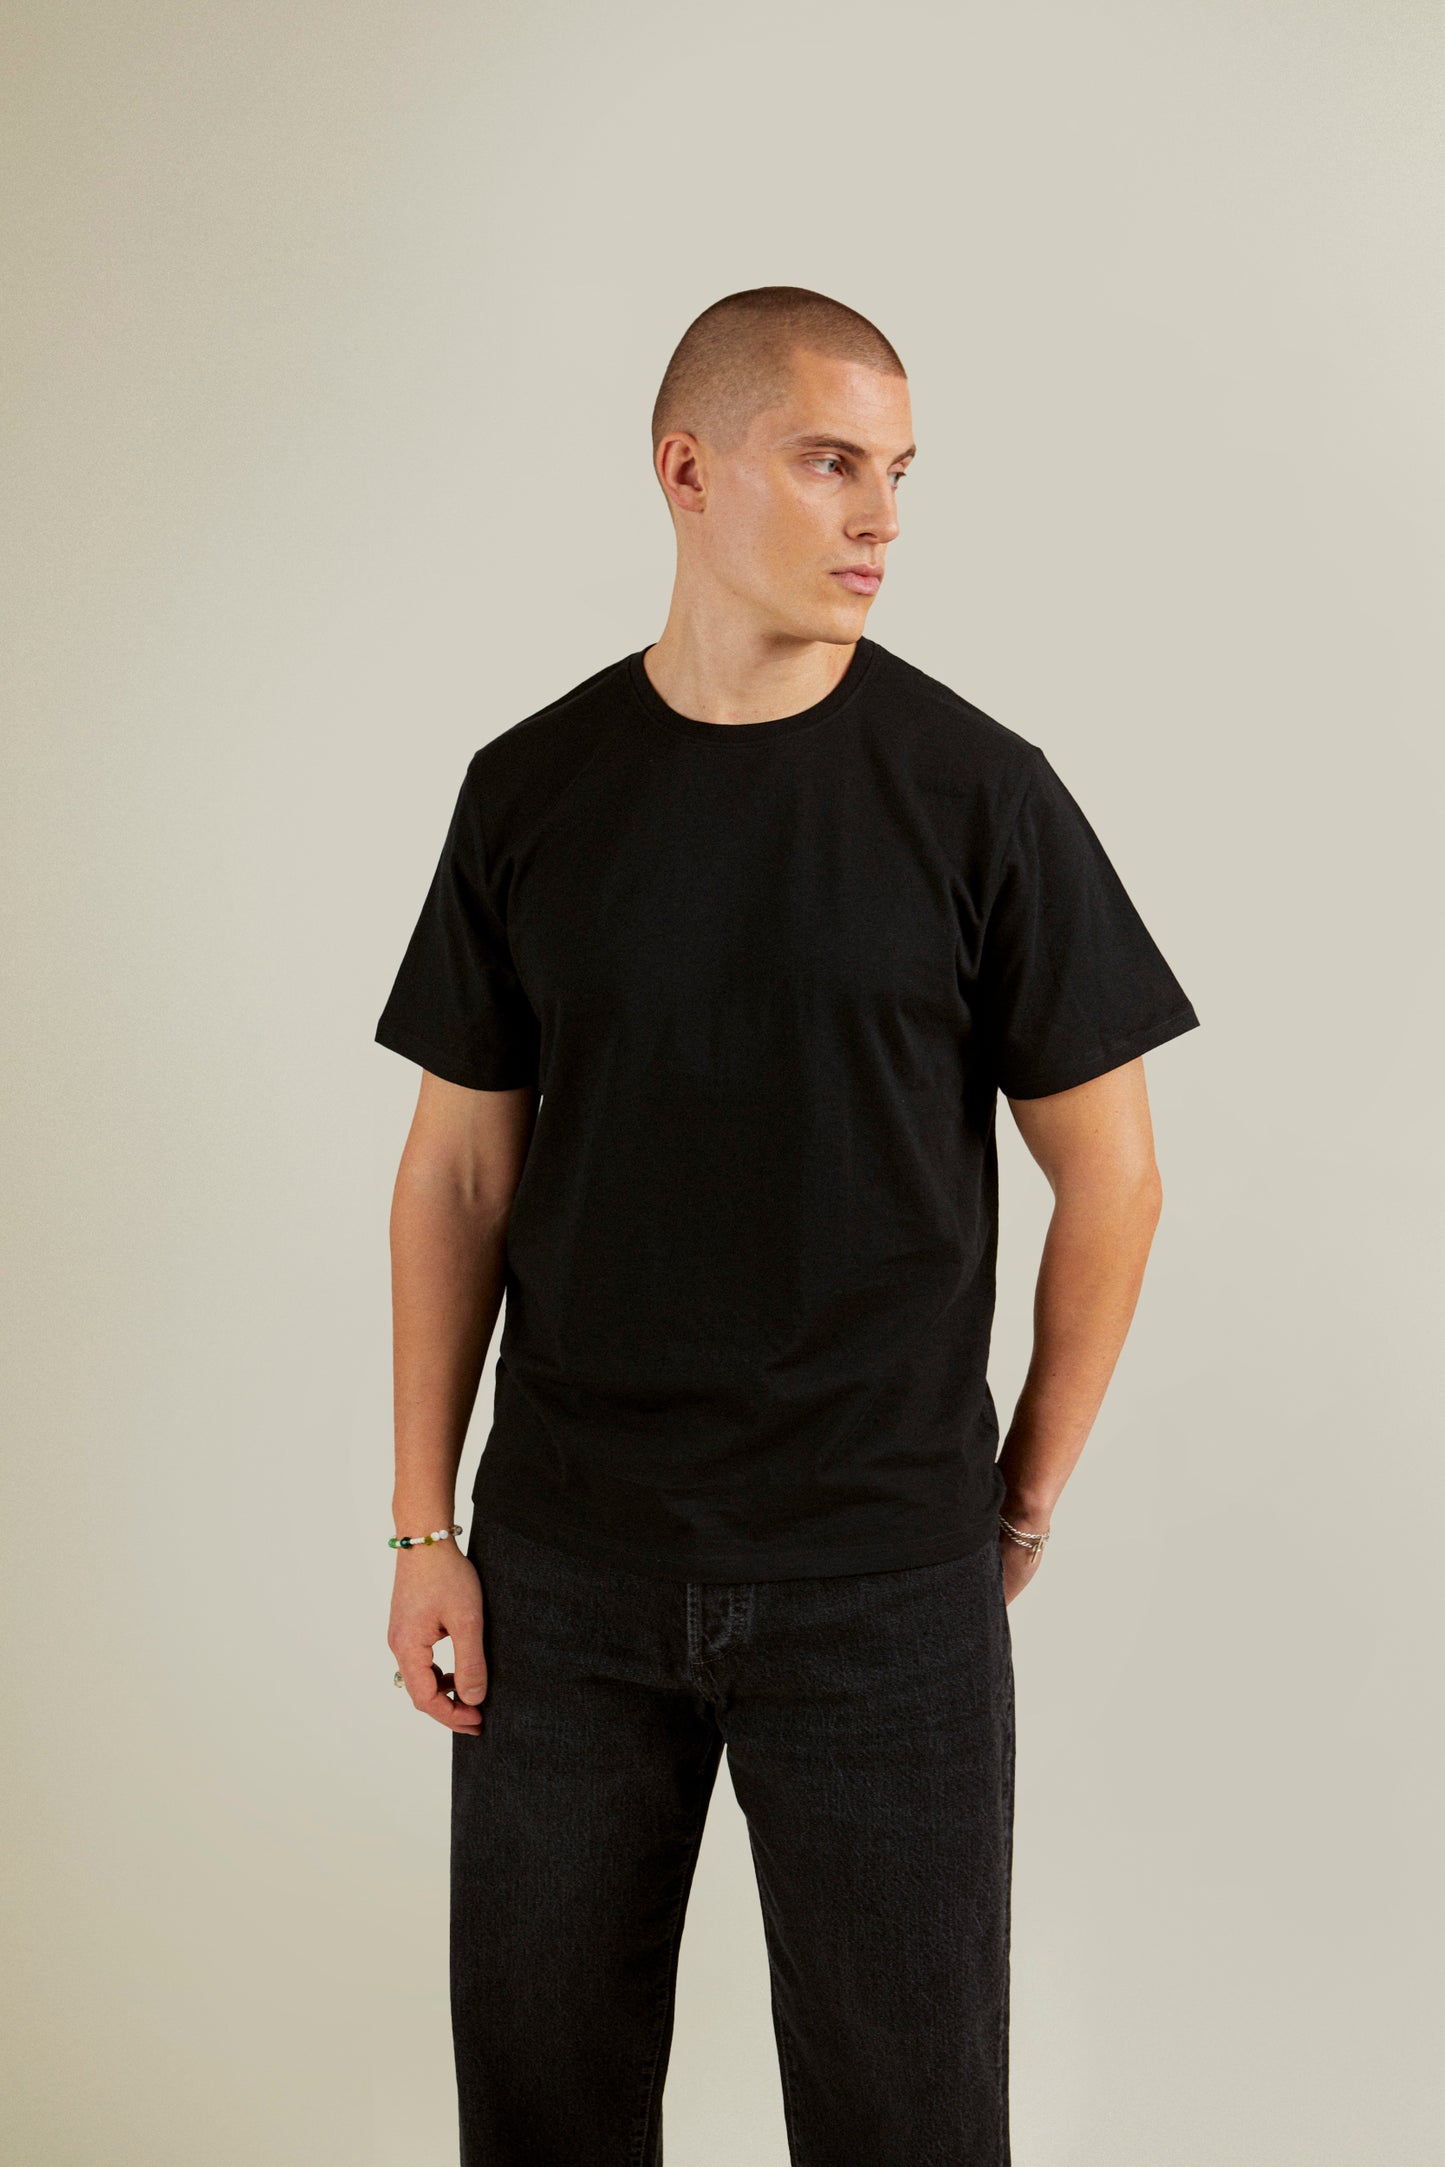 Men's t-shirt - Black and white (2-pack)